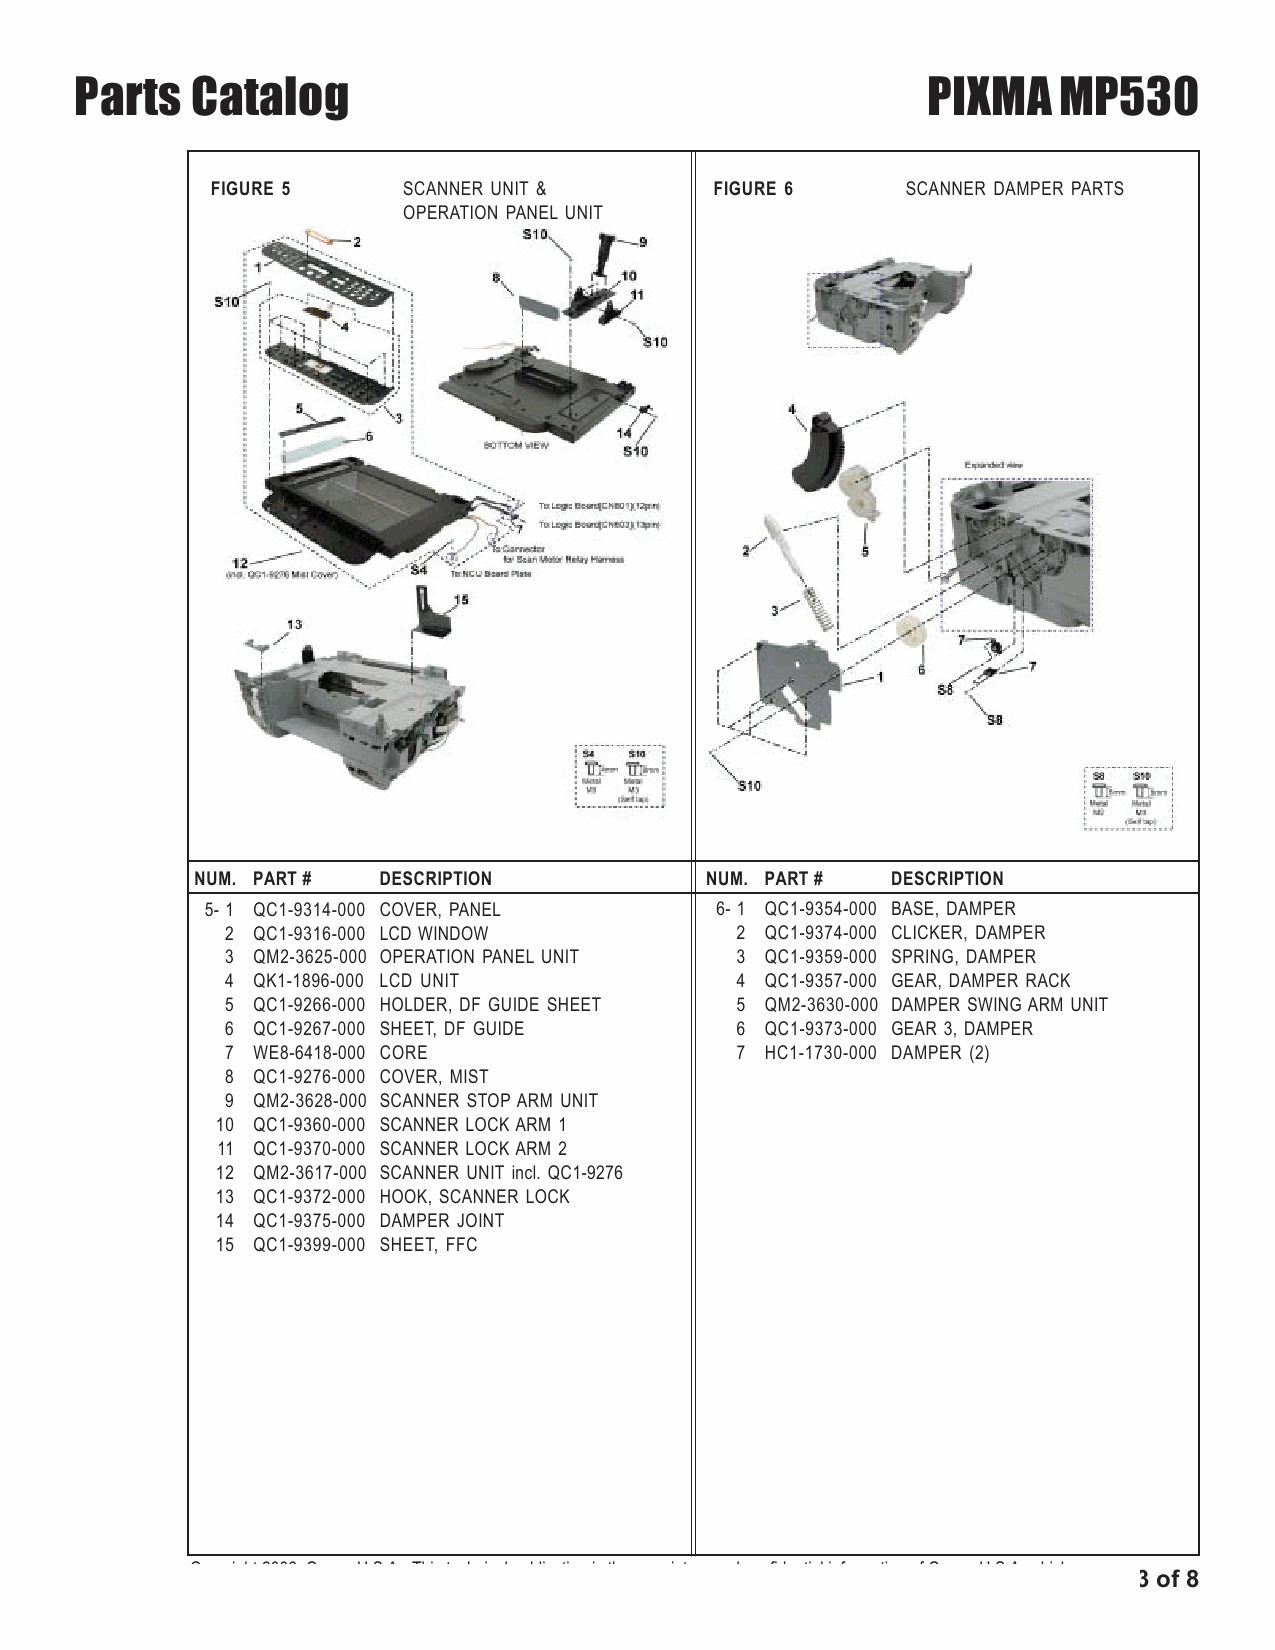 Canon PIXMA MP530 Parts and Service Manual-6